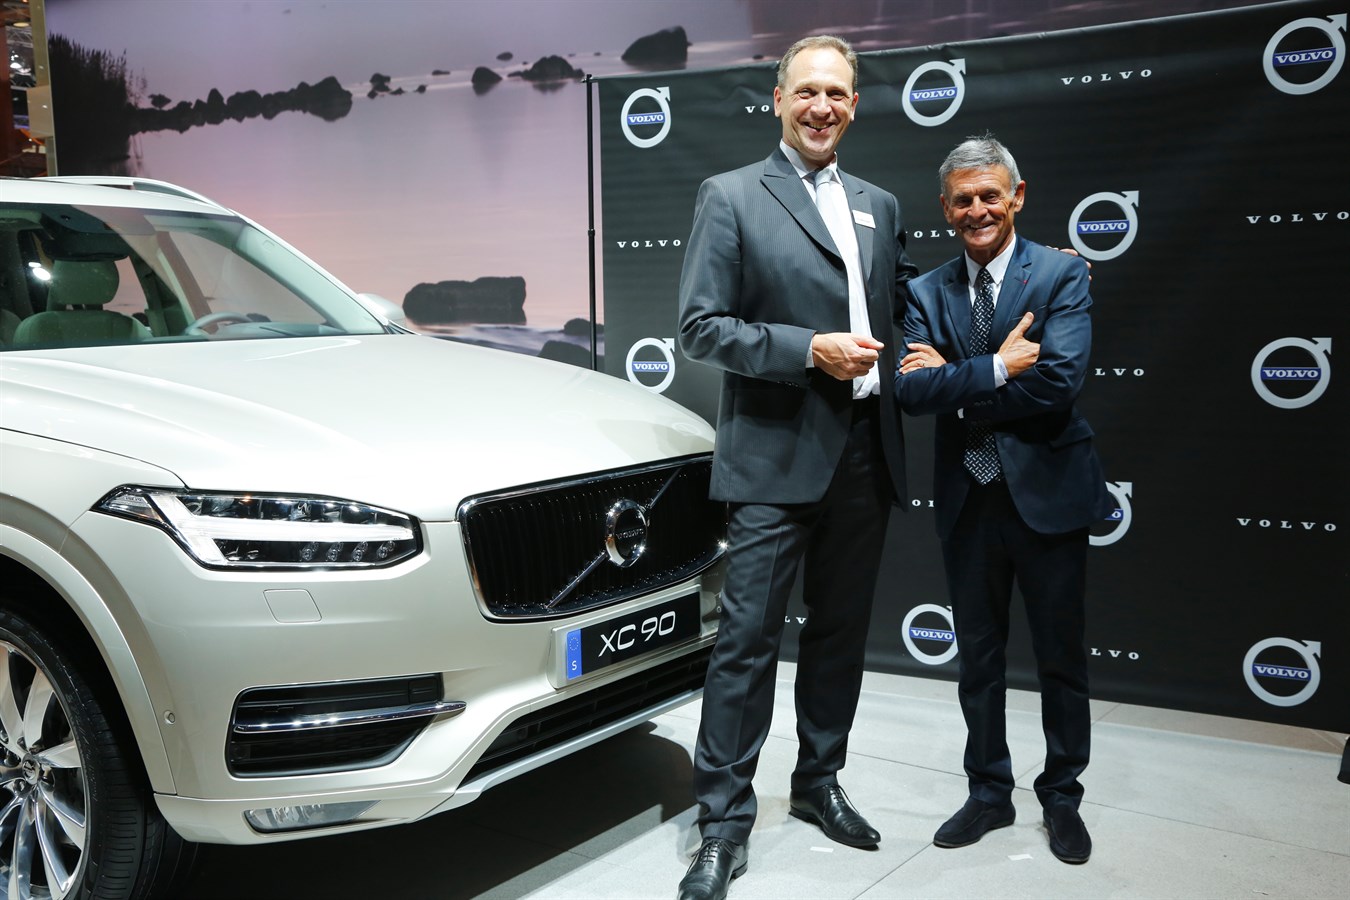 Volvo XC90 - Mondial de l'Automobile 2014 soirée VIP Yves Pasquier-Desvignes & Bernard Darniche